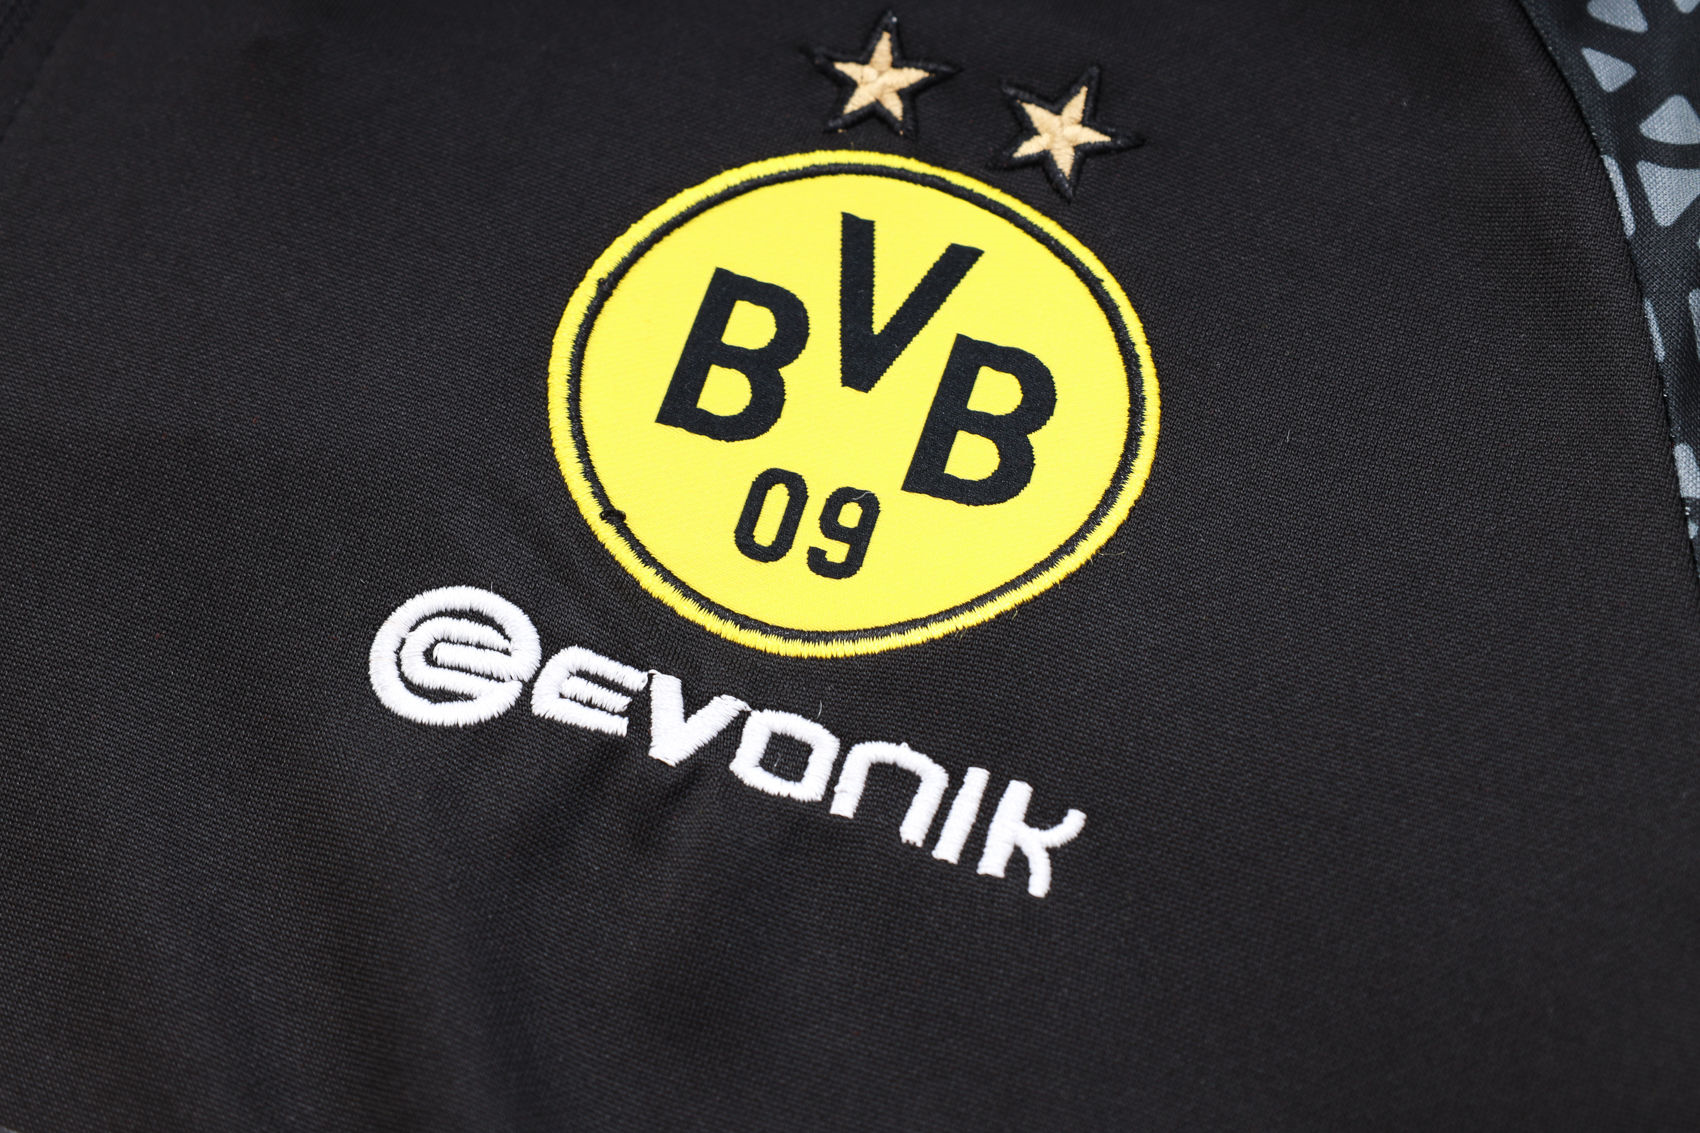 Men's Borussia Dortmund Black Training Set 2023/24